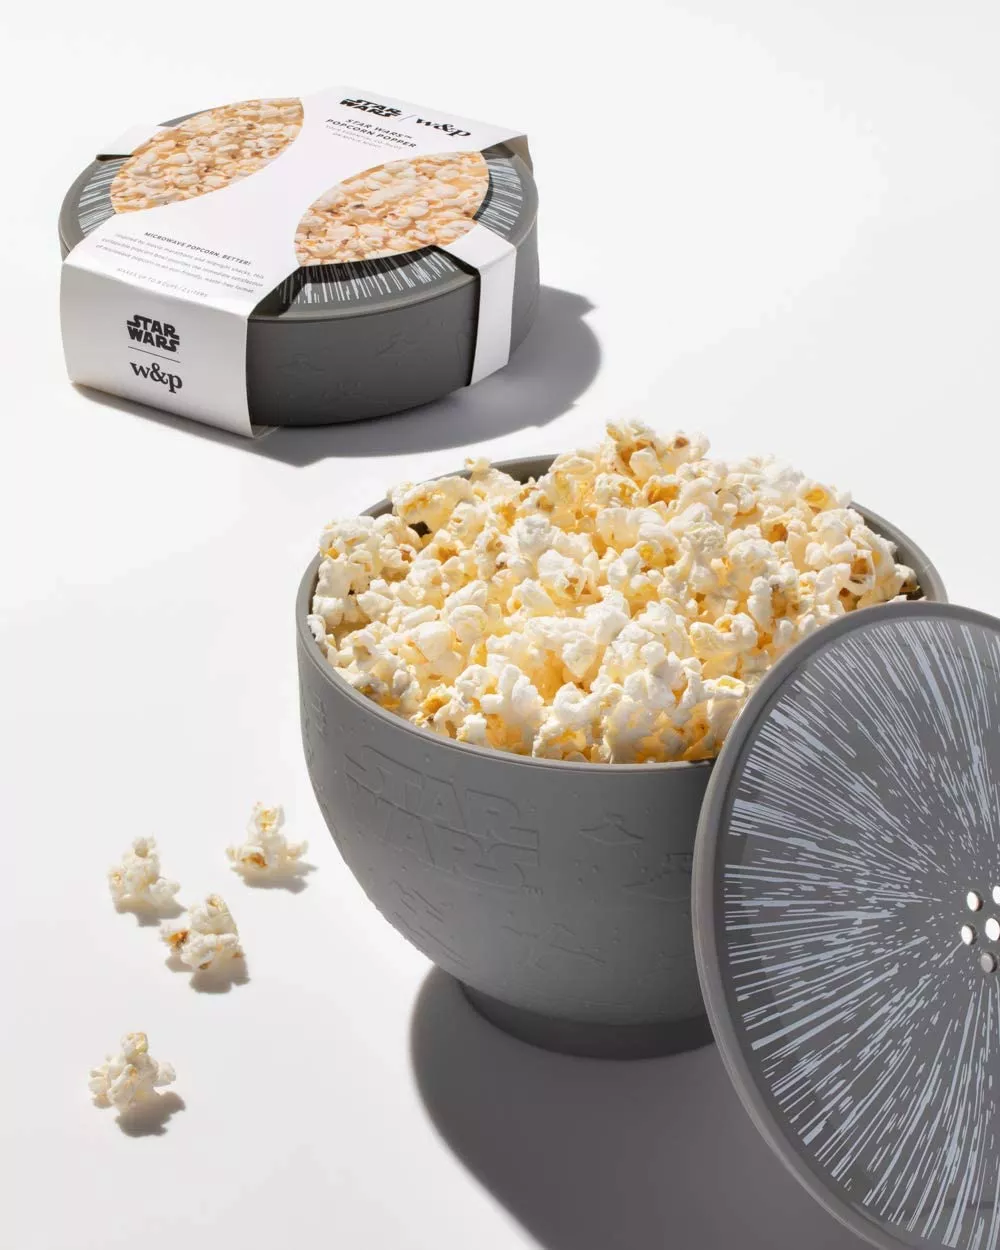 Star Wars Popcorn bowl gift ideas